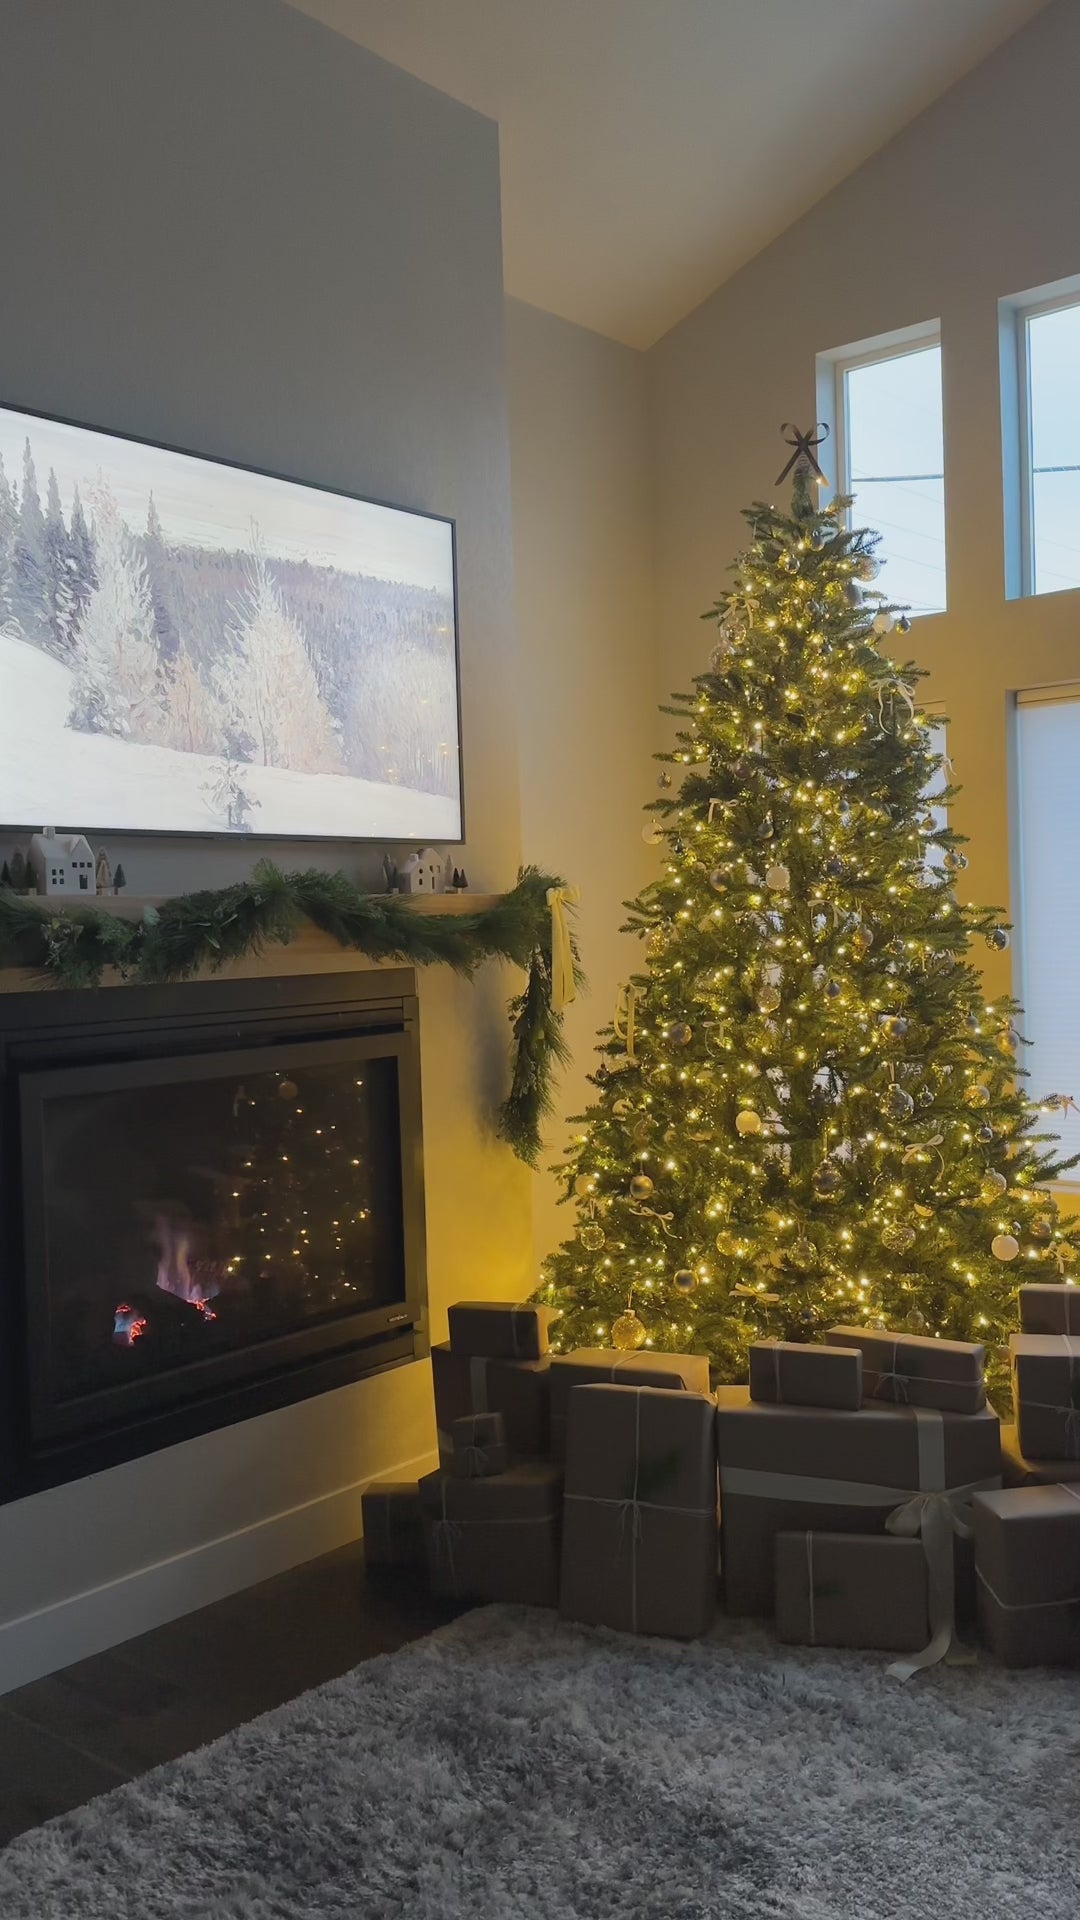 King of Christmas 8' Alpine Fir Tree 900 Warm White Led Lights